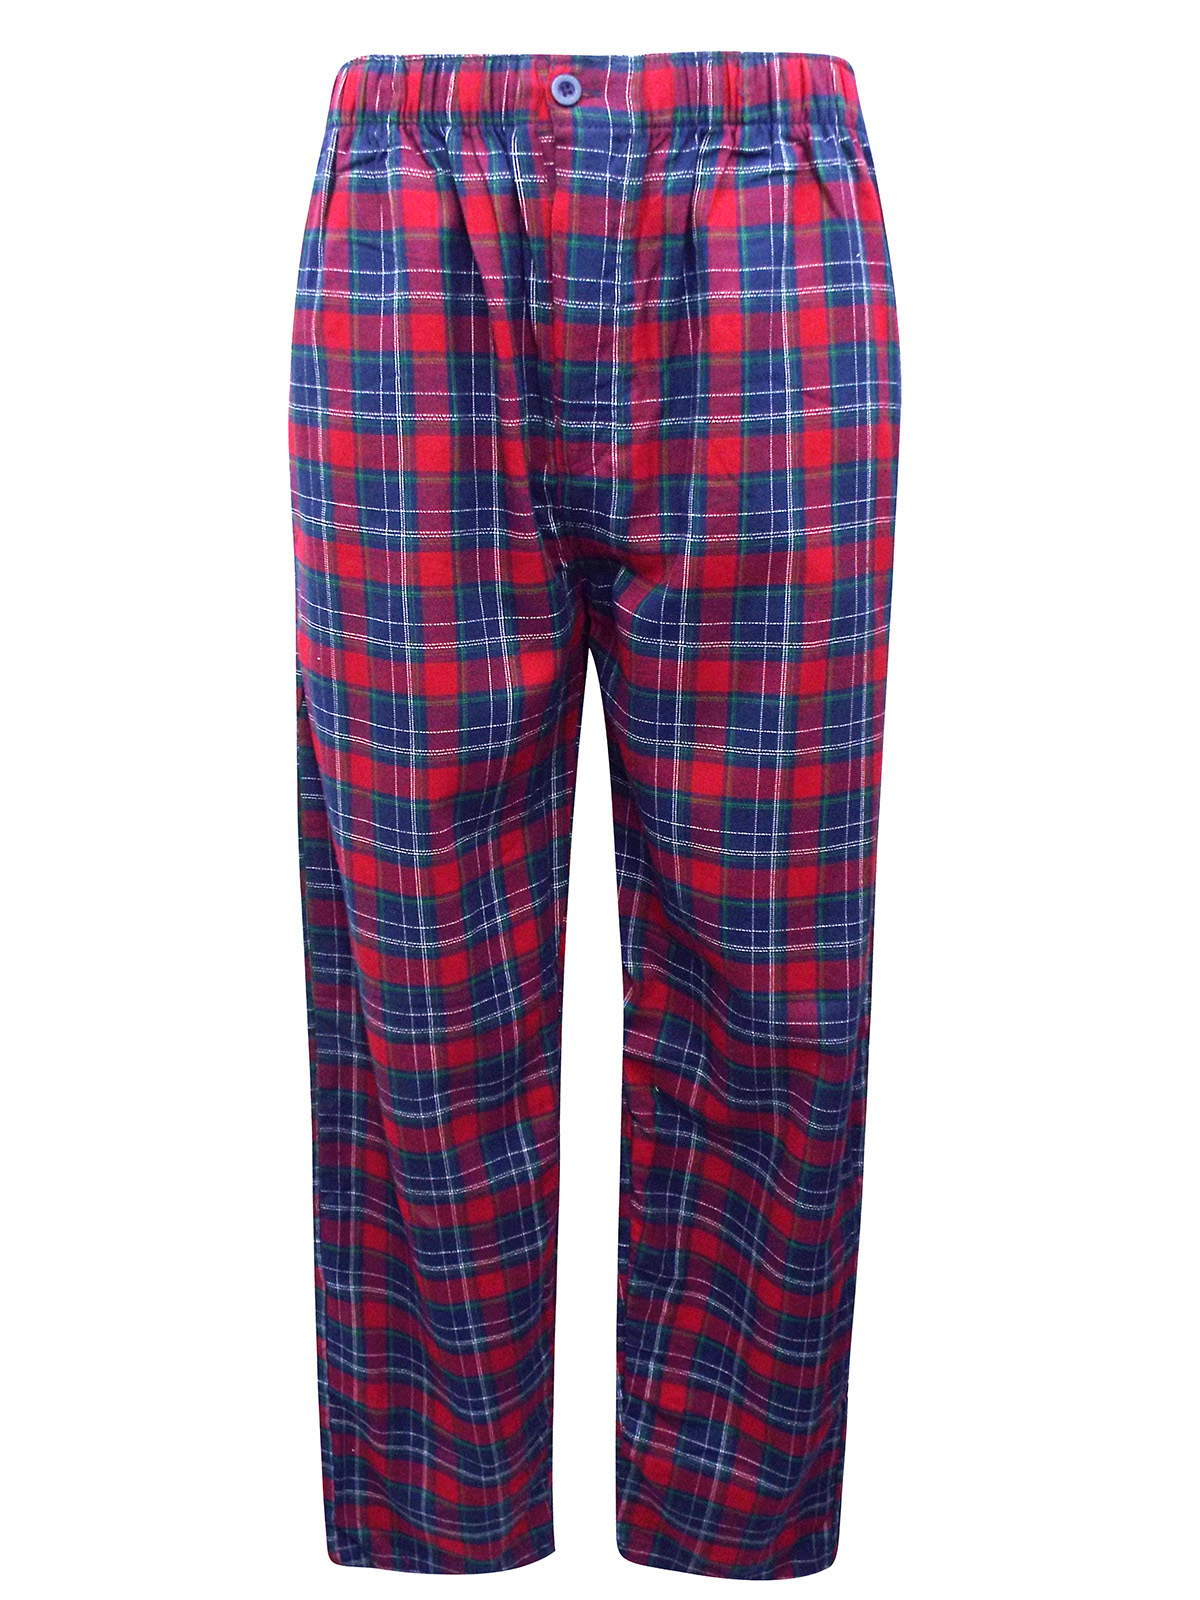 Tif Uomo - - TIF UOMO NAVY RED Check Trousers and Long Sleeve Pyjama ...